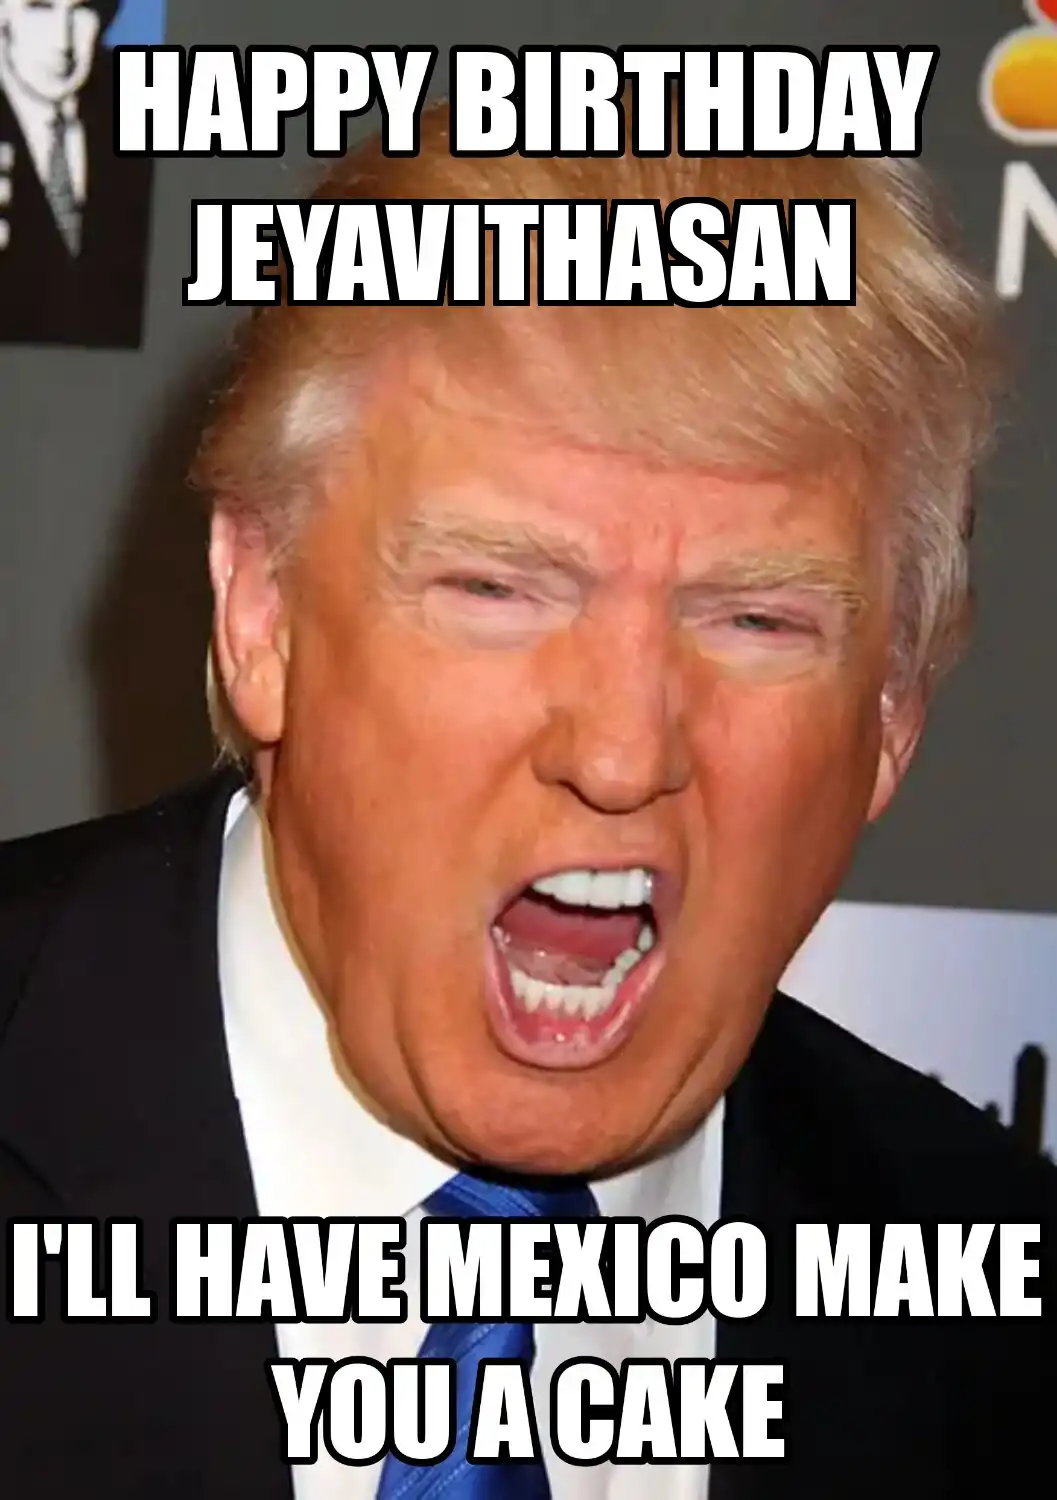 Happy Birthday Jeyavithasan Mexico Make You A Cake Meme